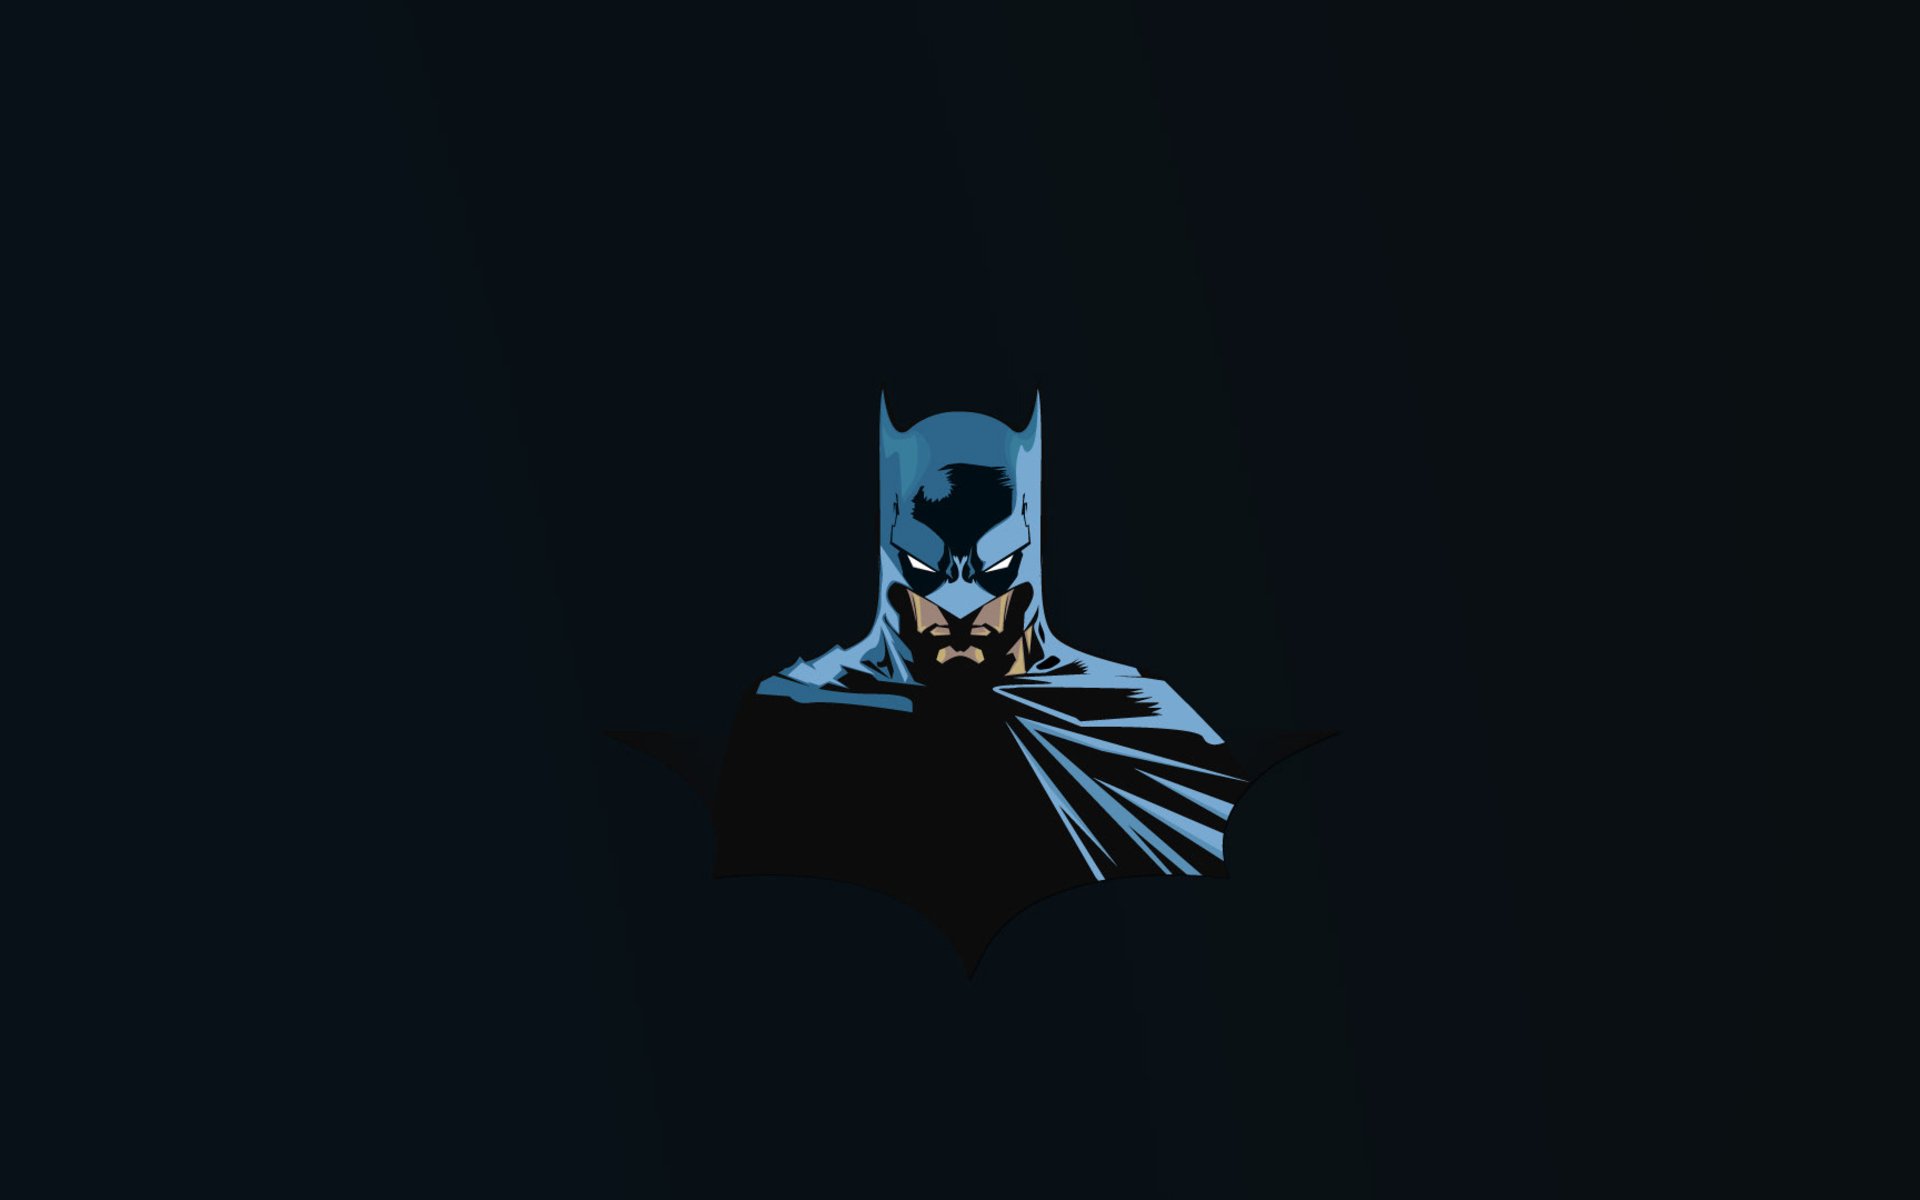 Download Wallpaper Batman, Blue Background, Superheroes, Minimal, Bat Man, Batman At Night, Batman Minimalism For Desktop With Resolution 1920x1200. High Quality HD Picture Wallpaper